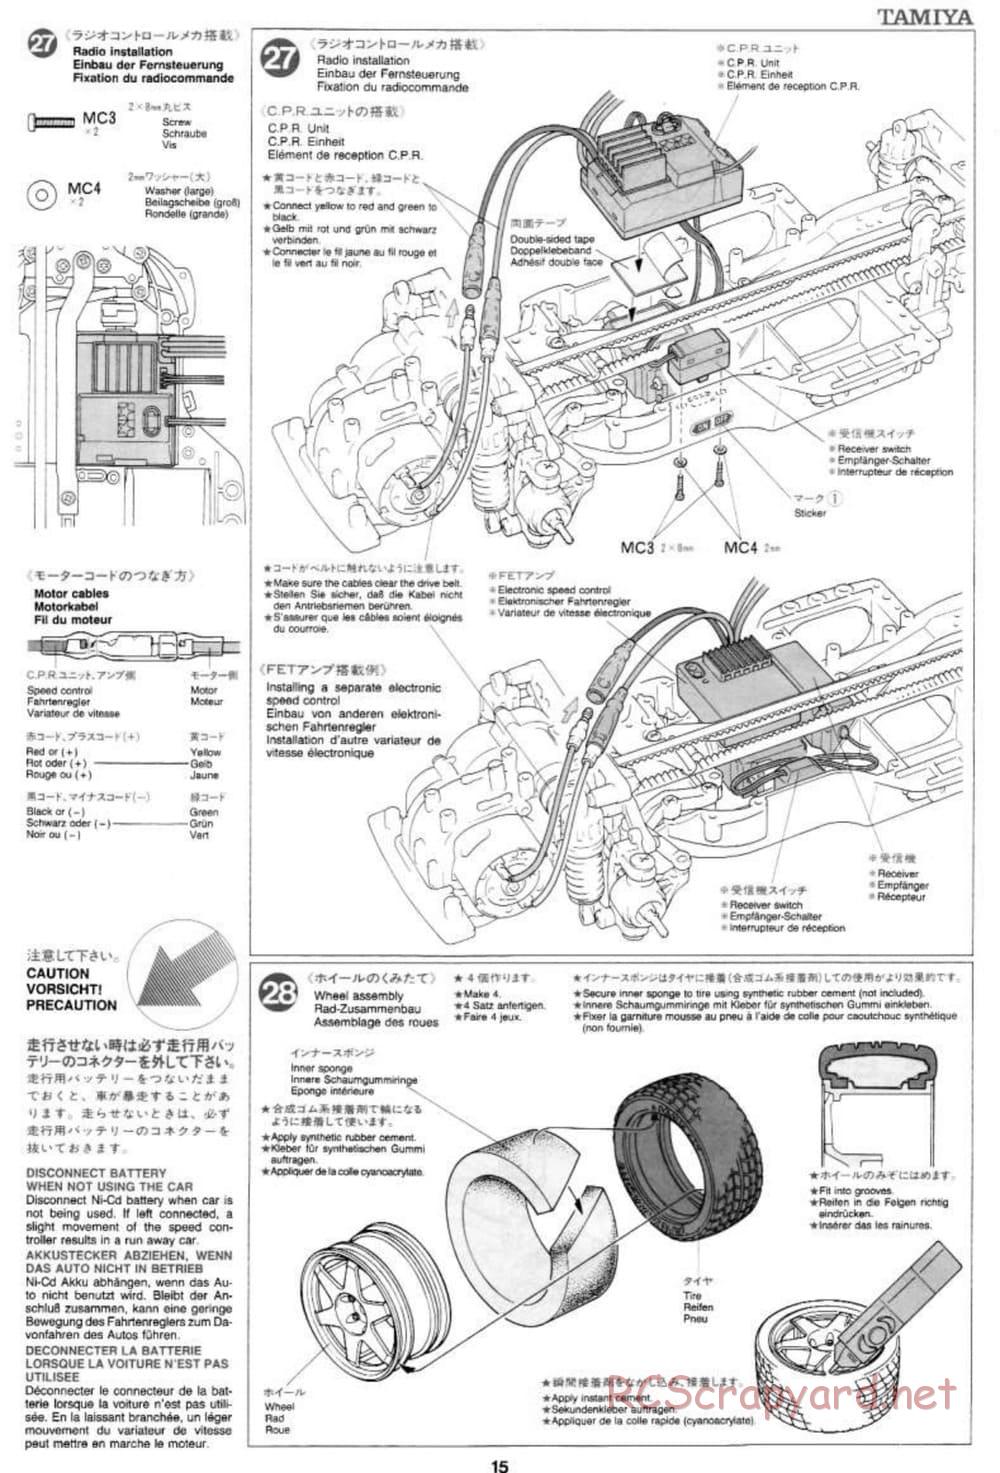 Tamiya - Subaru Impreza WRC 97 - TA-03F Chassis - Manual - Page 15